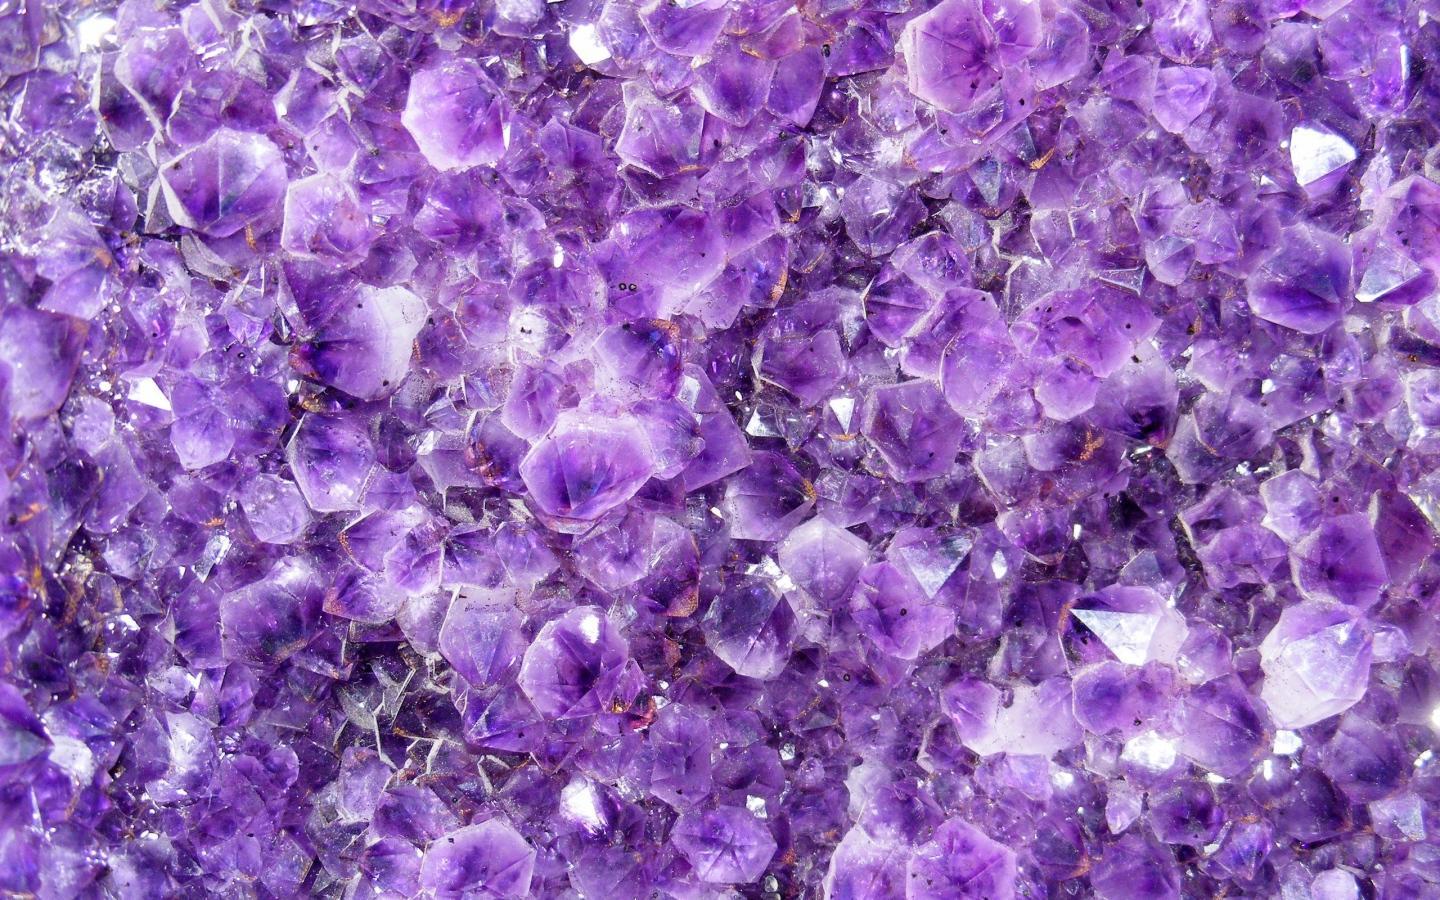 Muriva Madison Rose Floral Amethyst Glitter Wallpaper - 139522